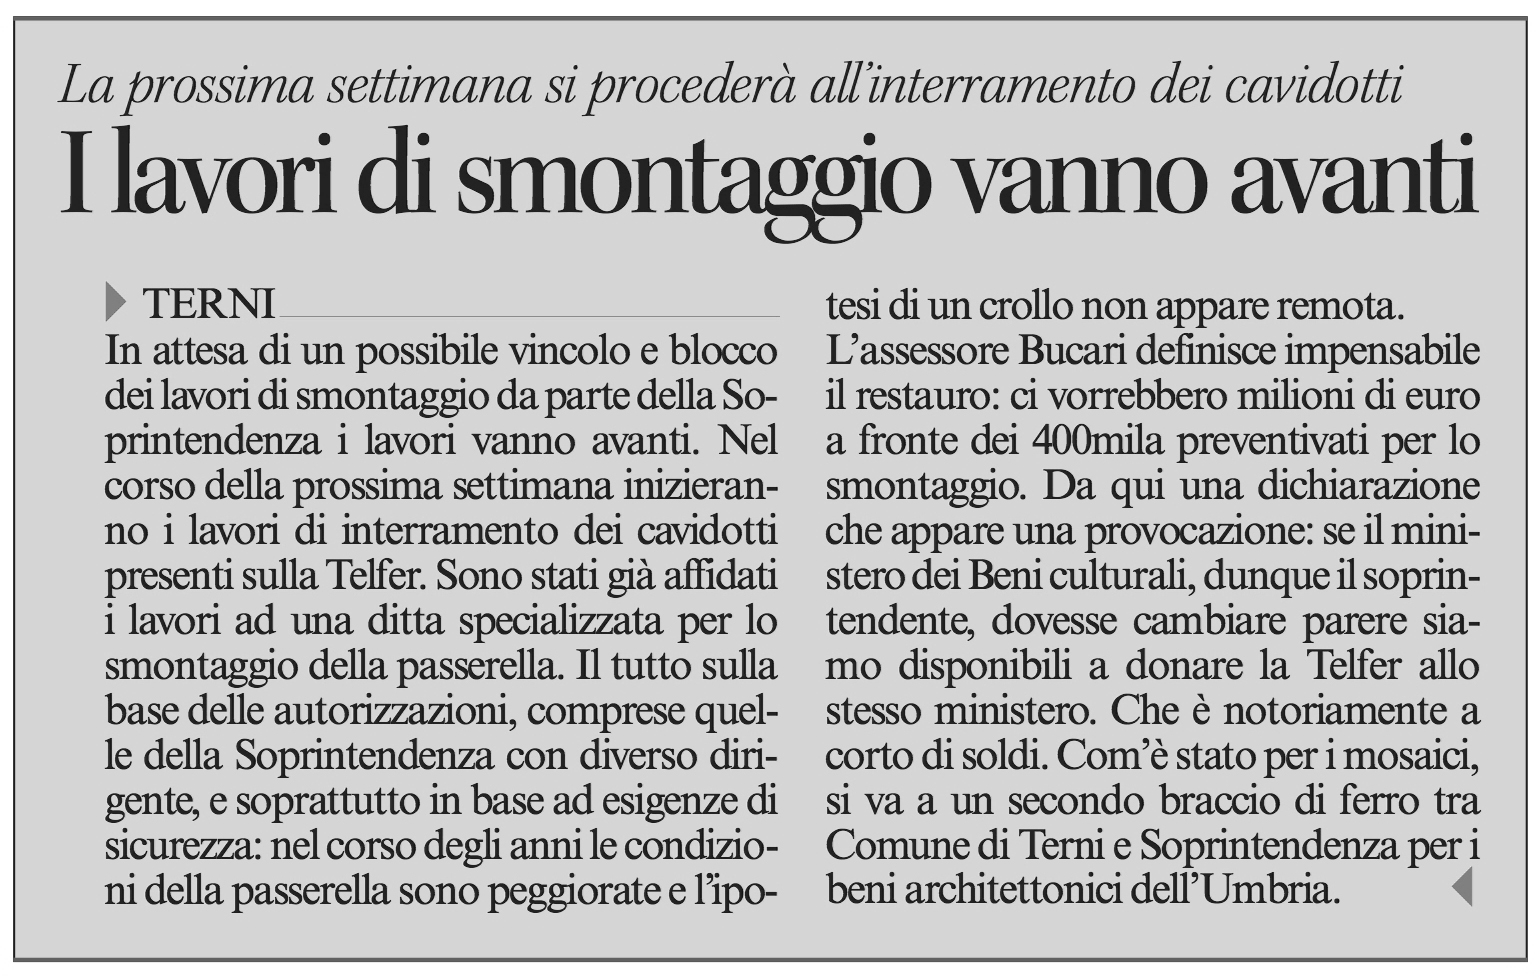 Corriere dell'Umbria p. 43, 25-04-2015